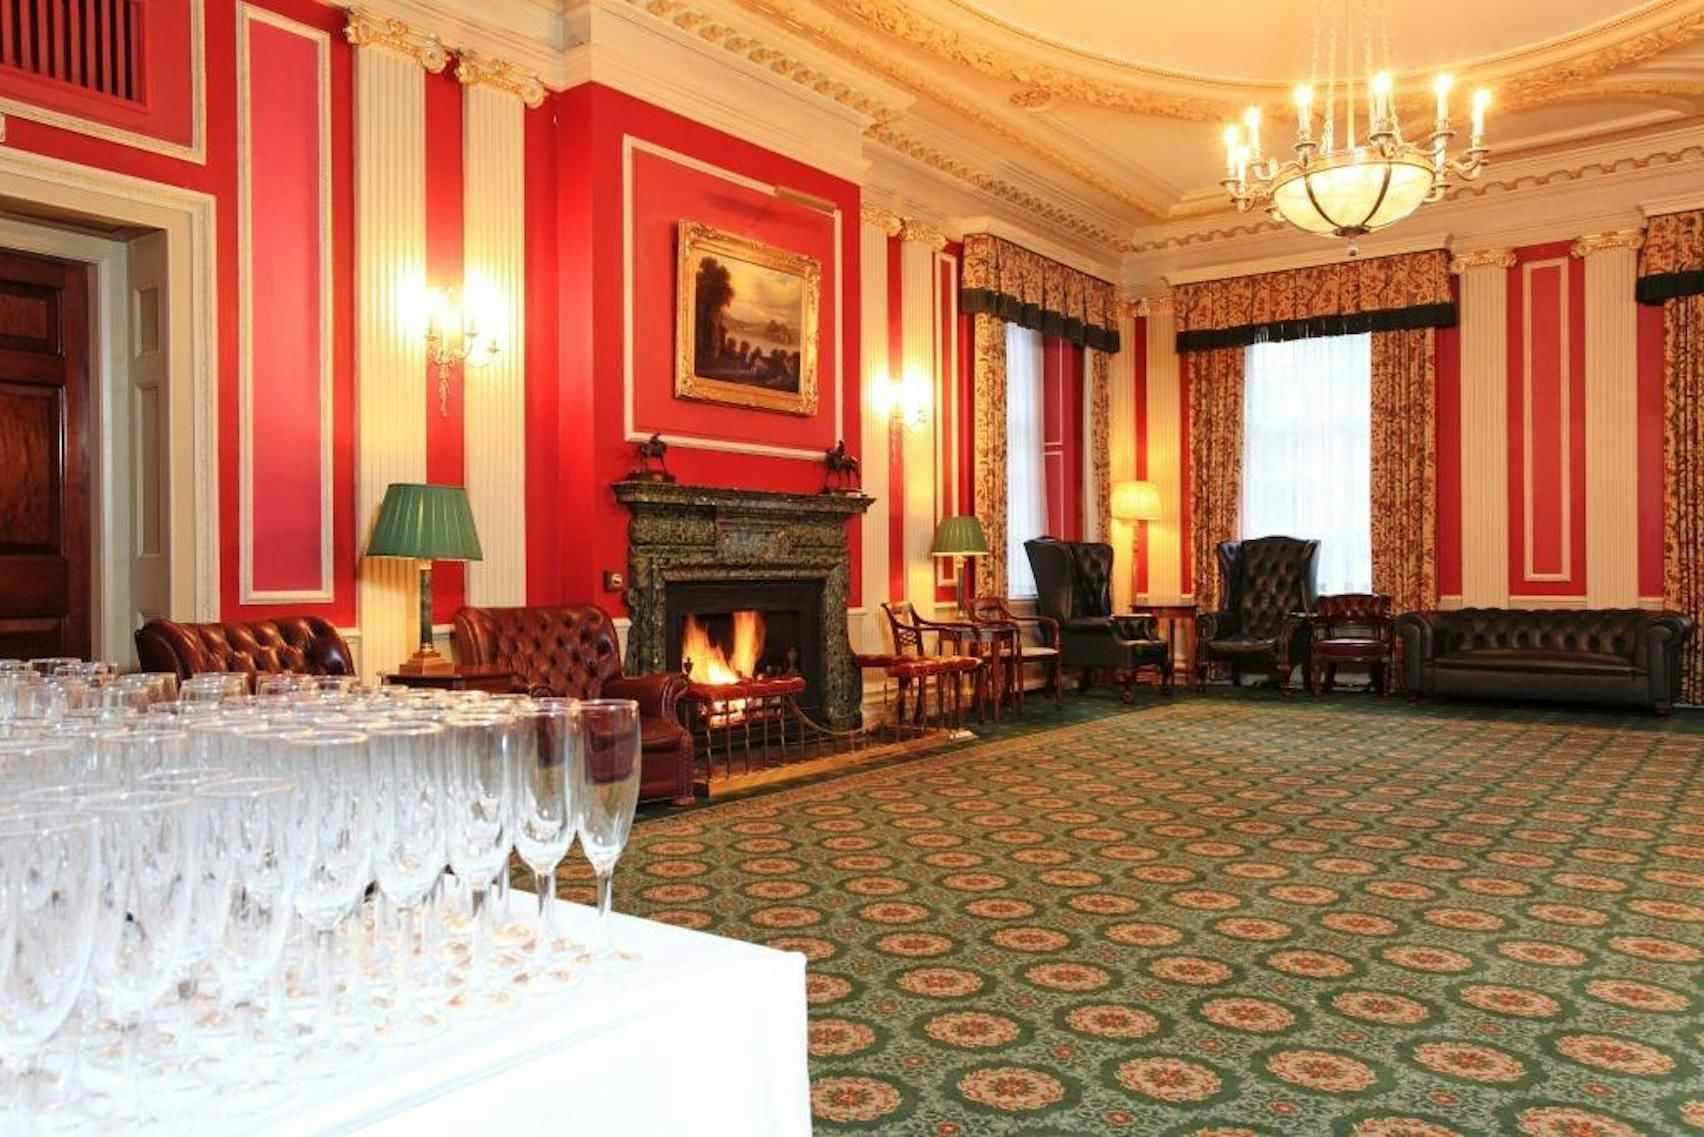 Morrison Room, The Caledonian Club